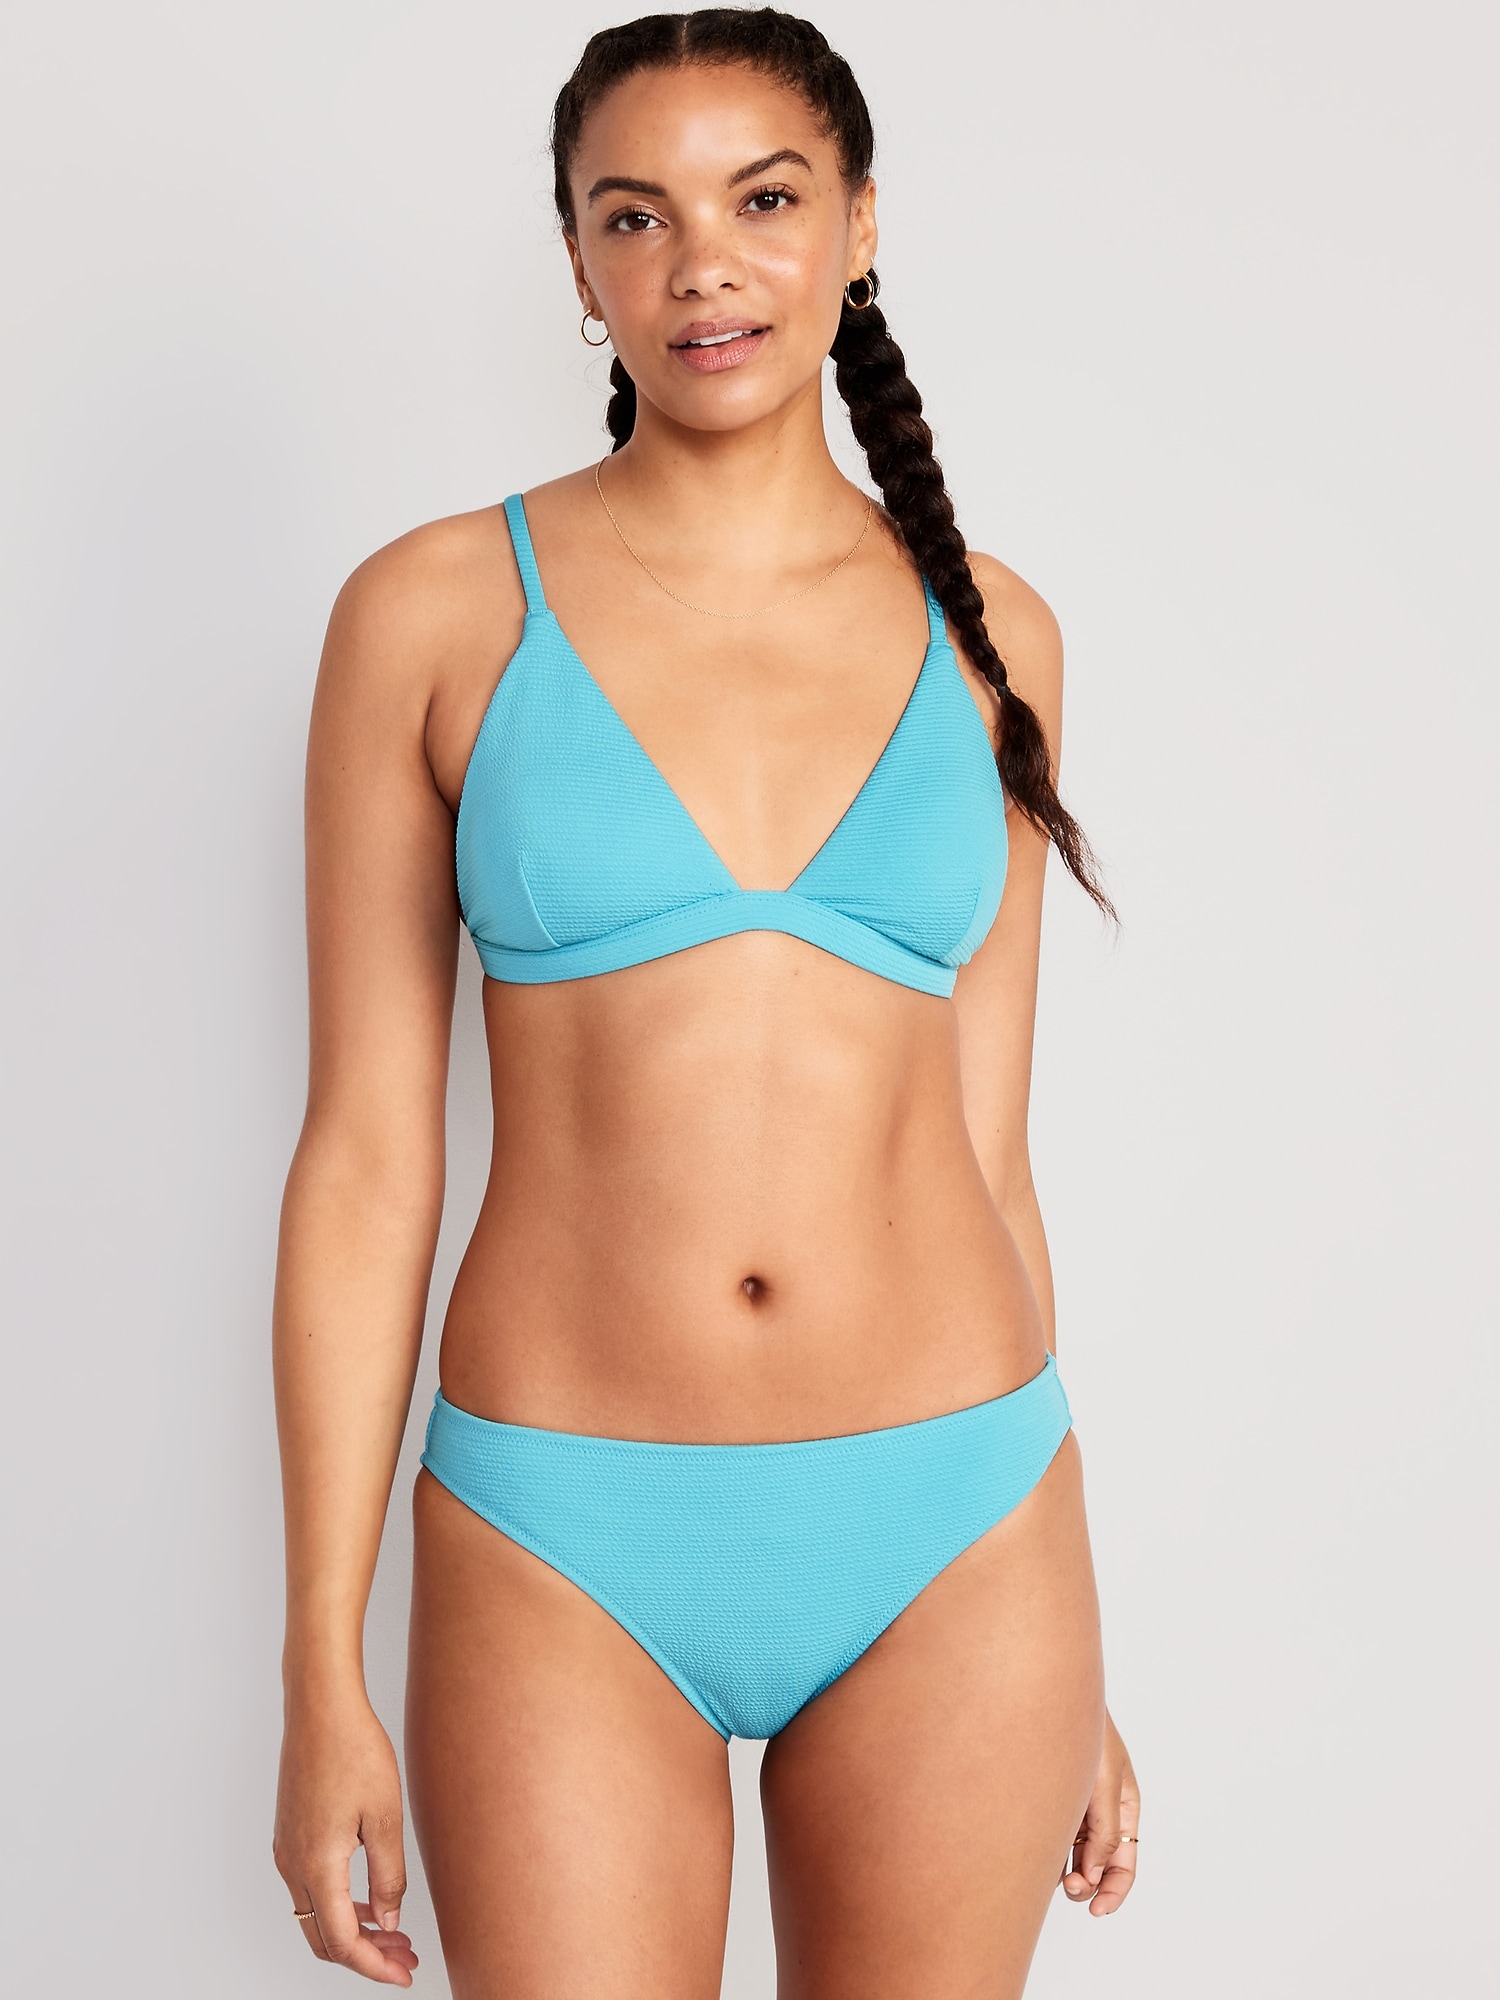 Old Navy Pucker Triangle Bikini Swim Top for Women blue. 1